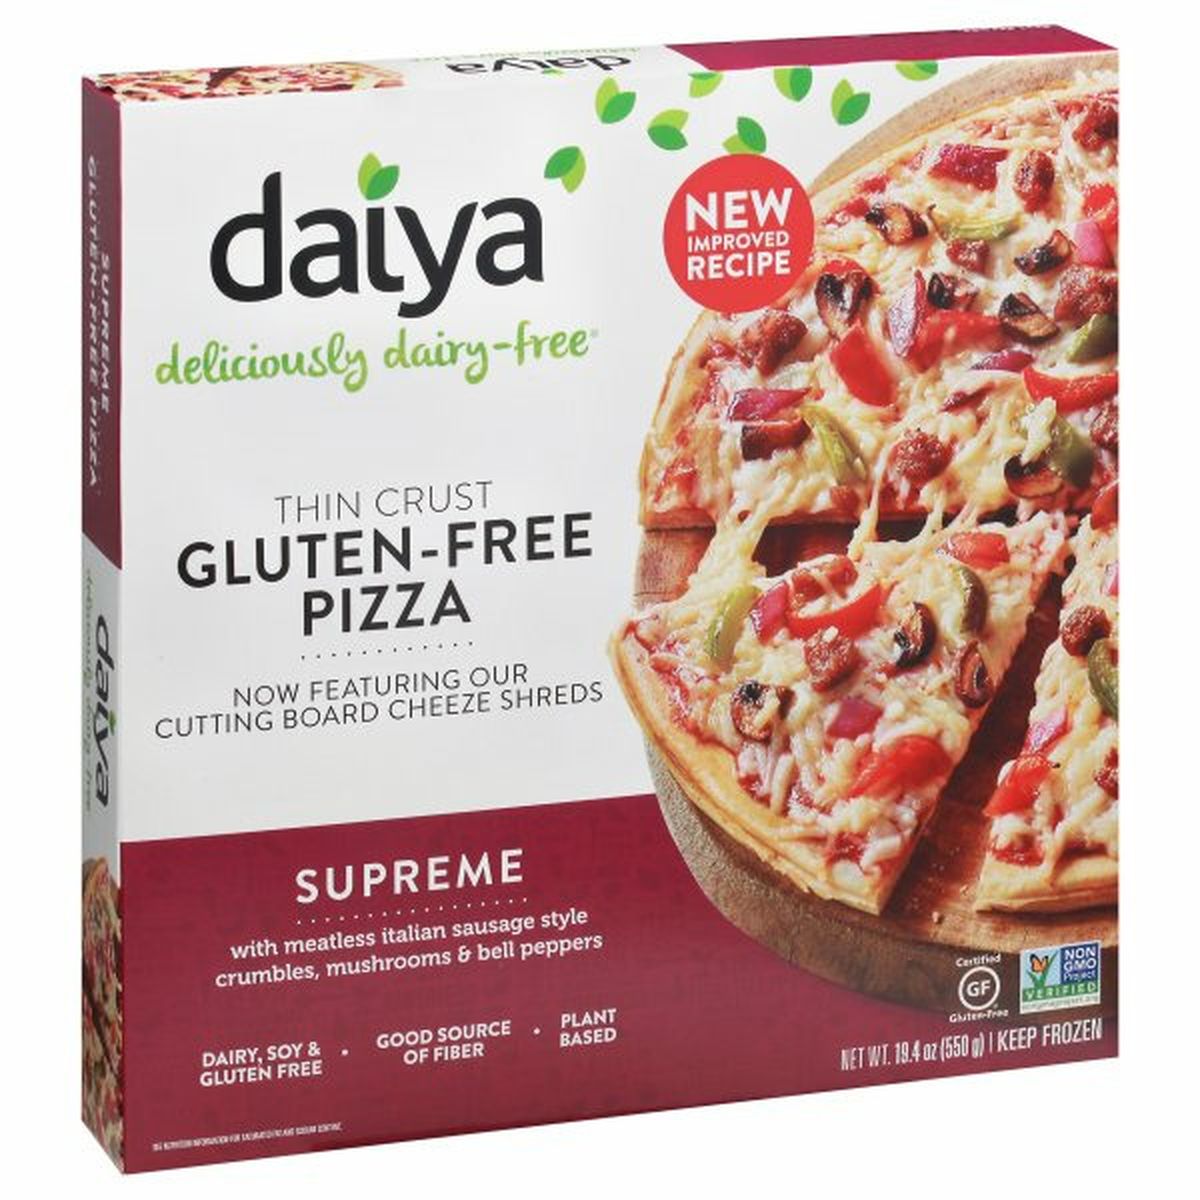 Calories in Daiya Pizza, Gluten-Free, Thin Crust, Supreme